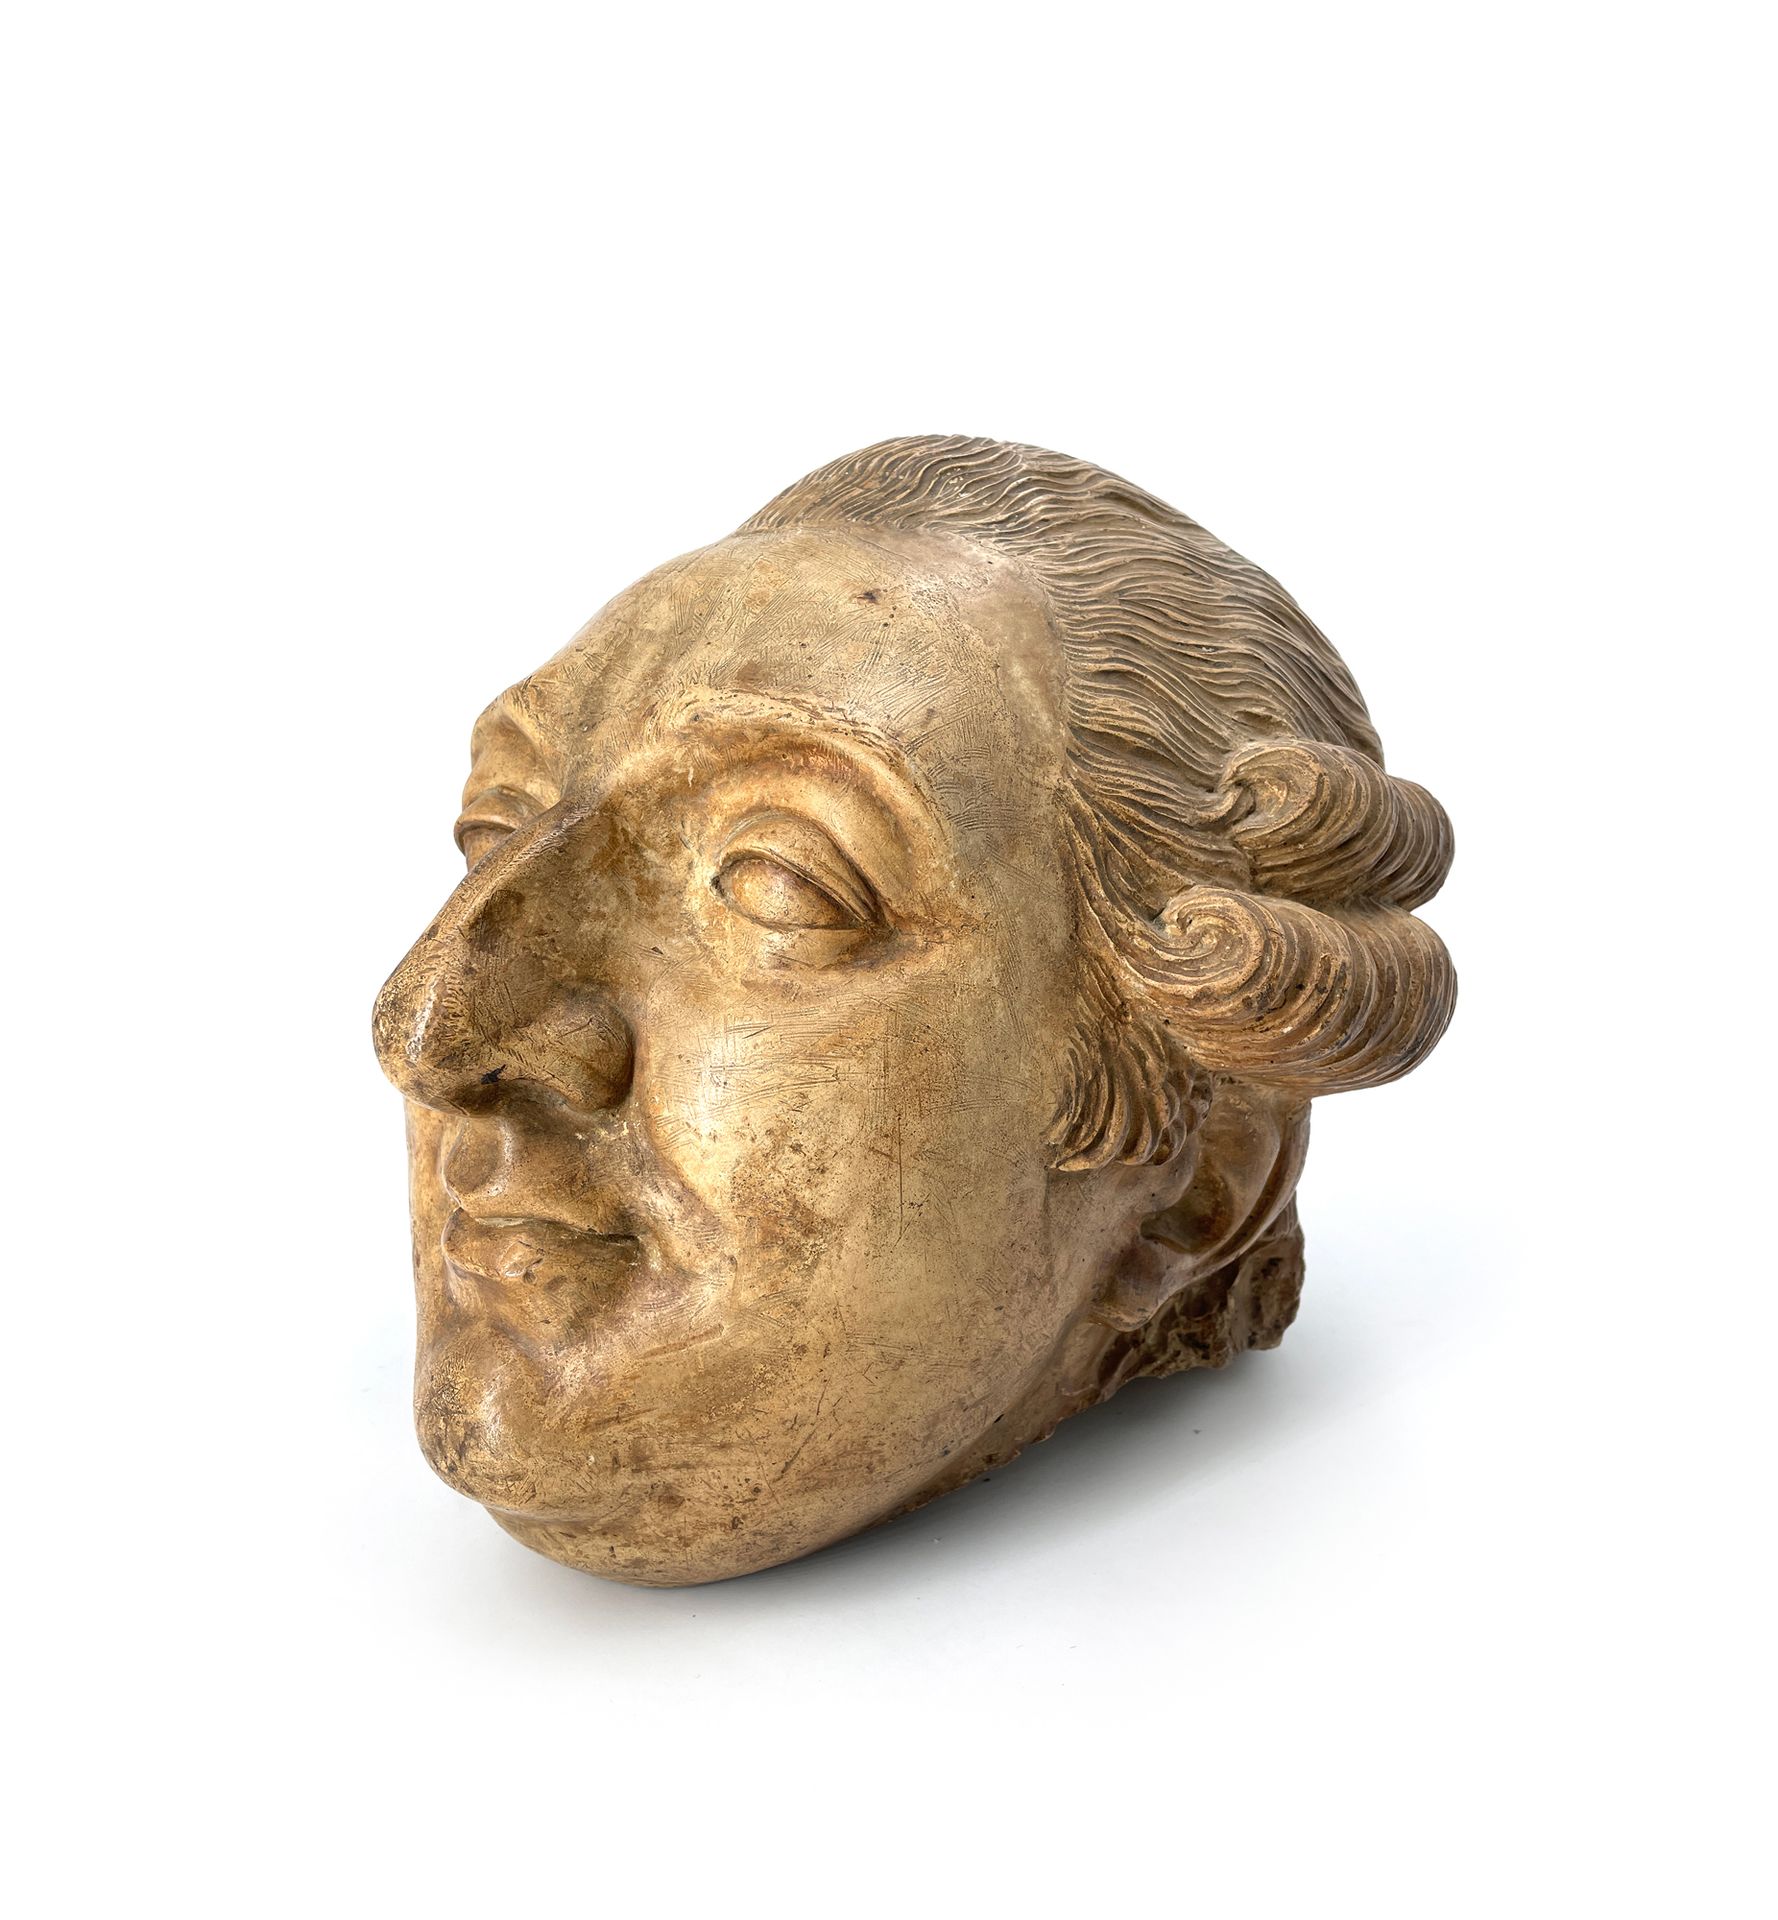 Null "路易十六国王 "
斑驳的赤土灰泥中的国王真人头像的美丽表现。
B.E.
高度：26厘米。30 x 30厘米。